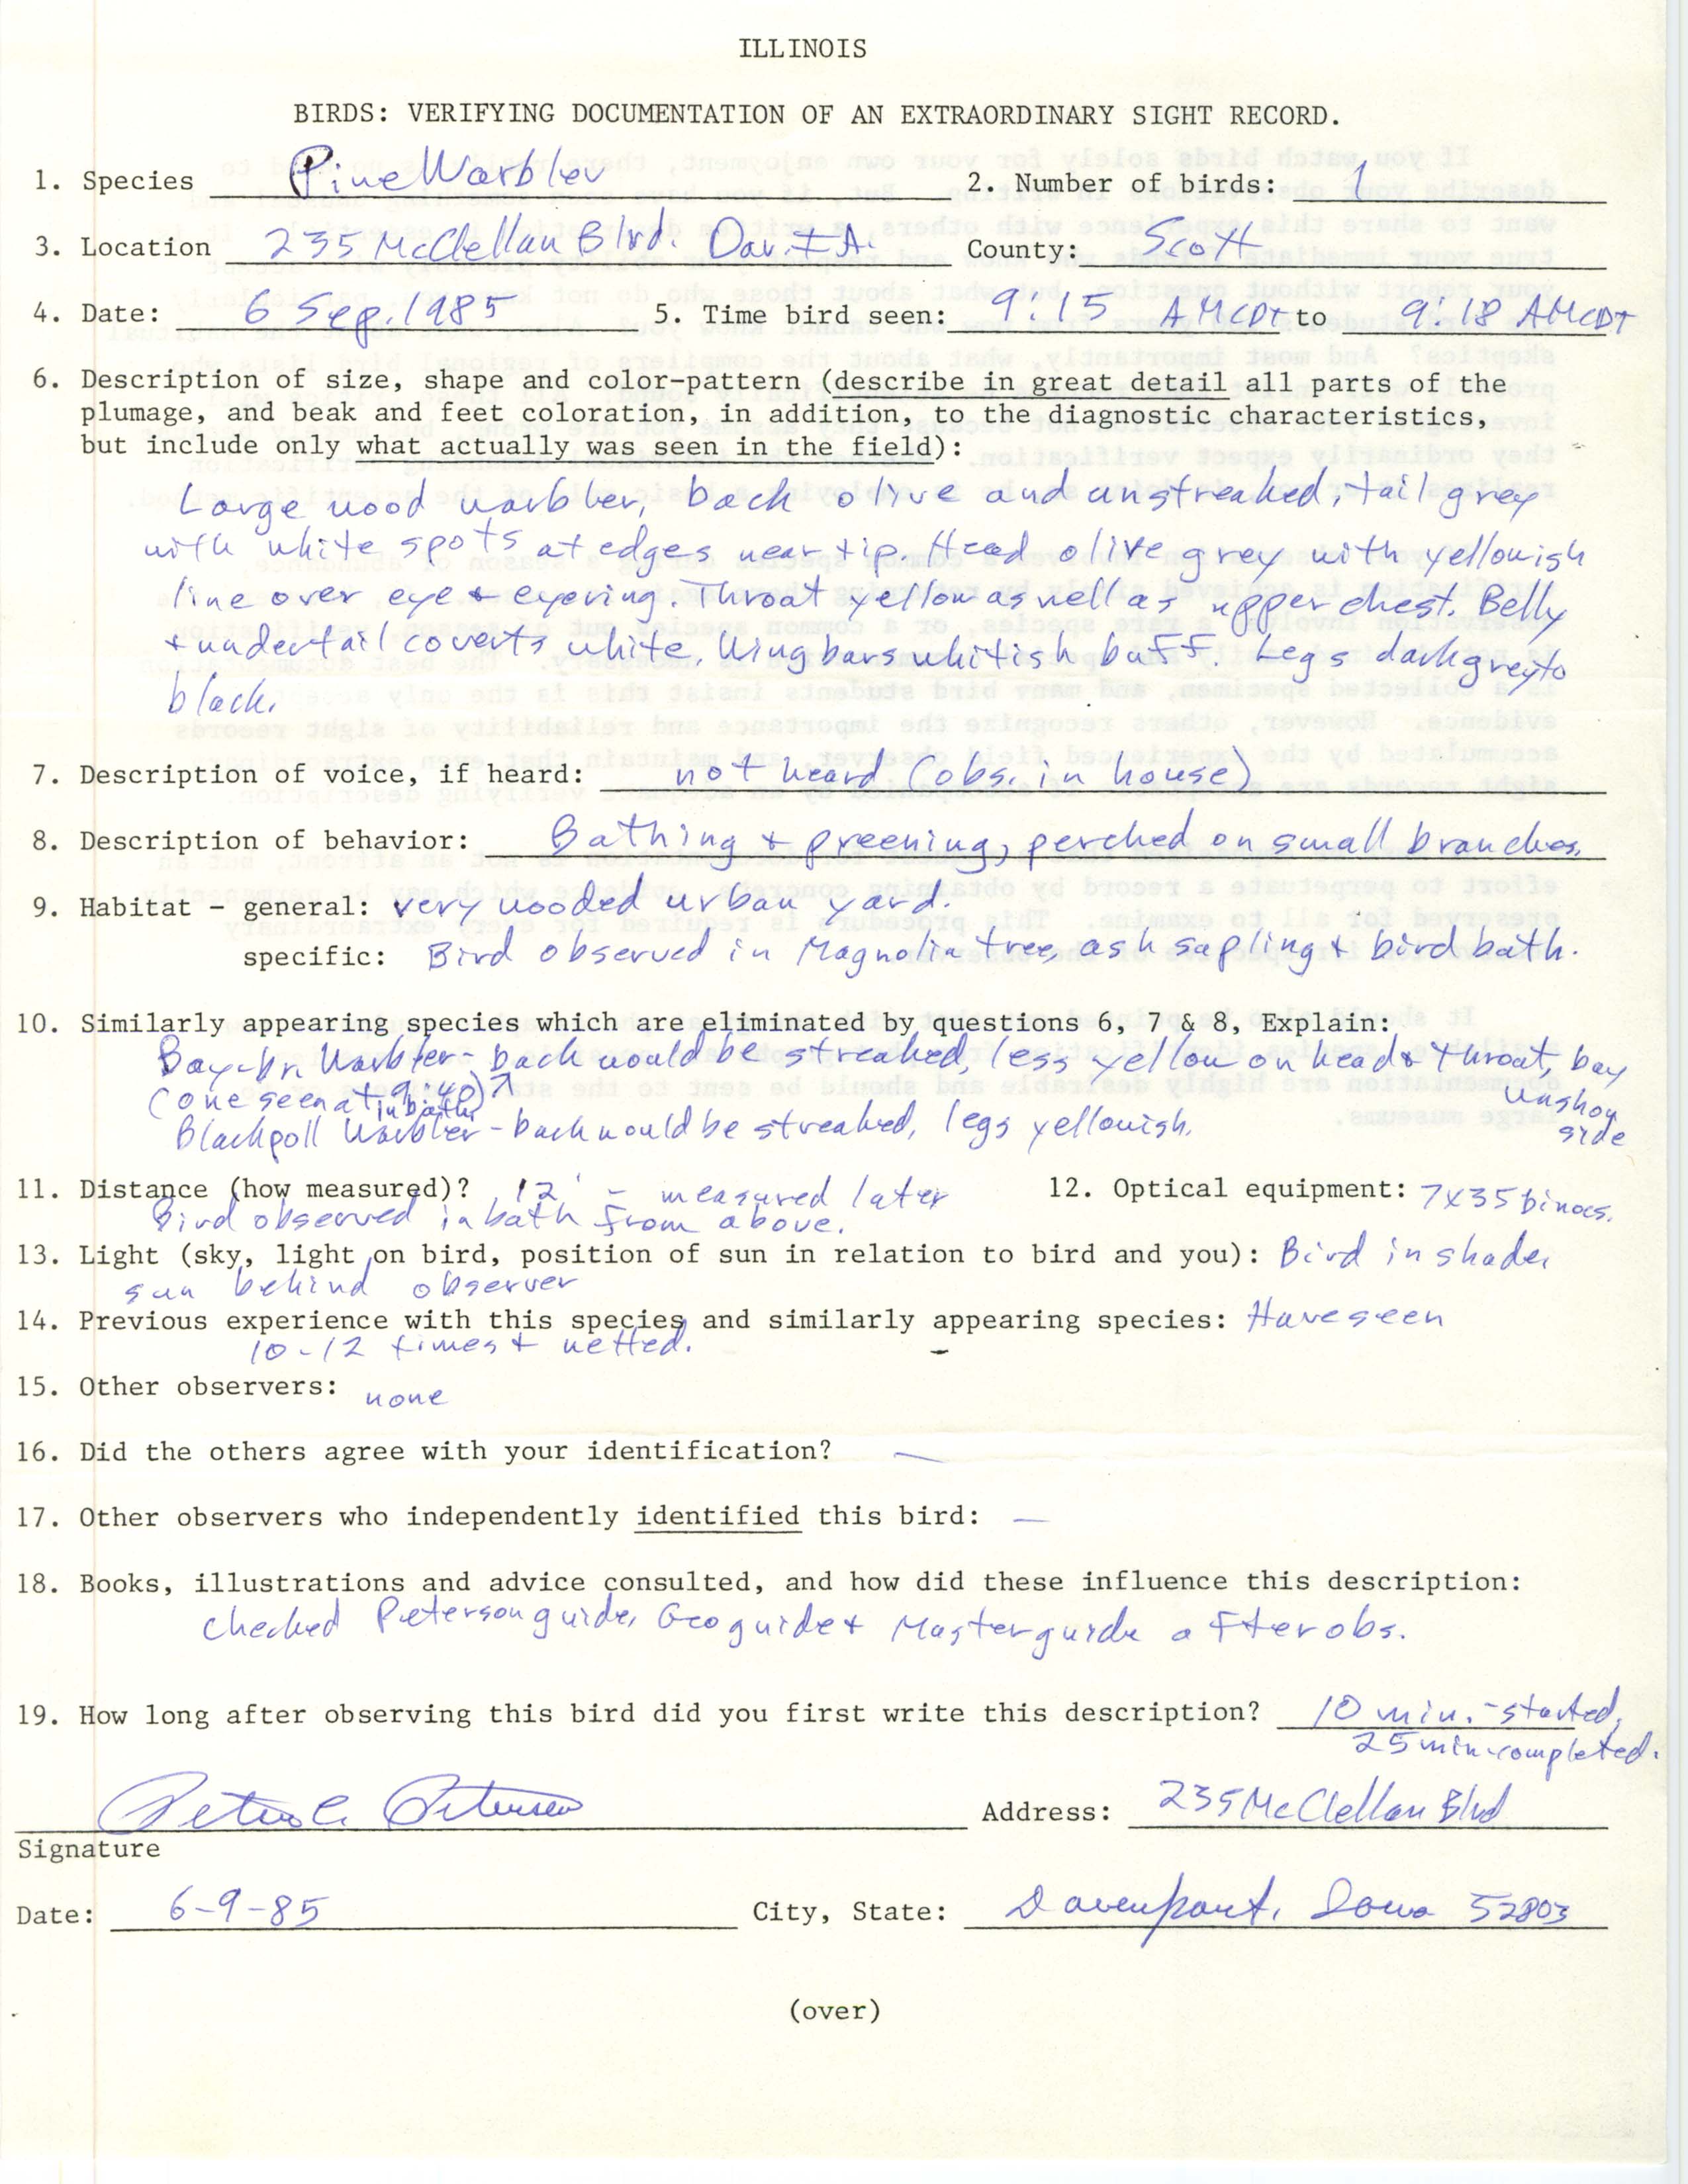 Rare bird documentation form for Pine Warbler at Davenport, 1985